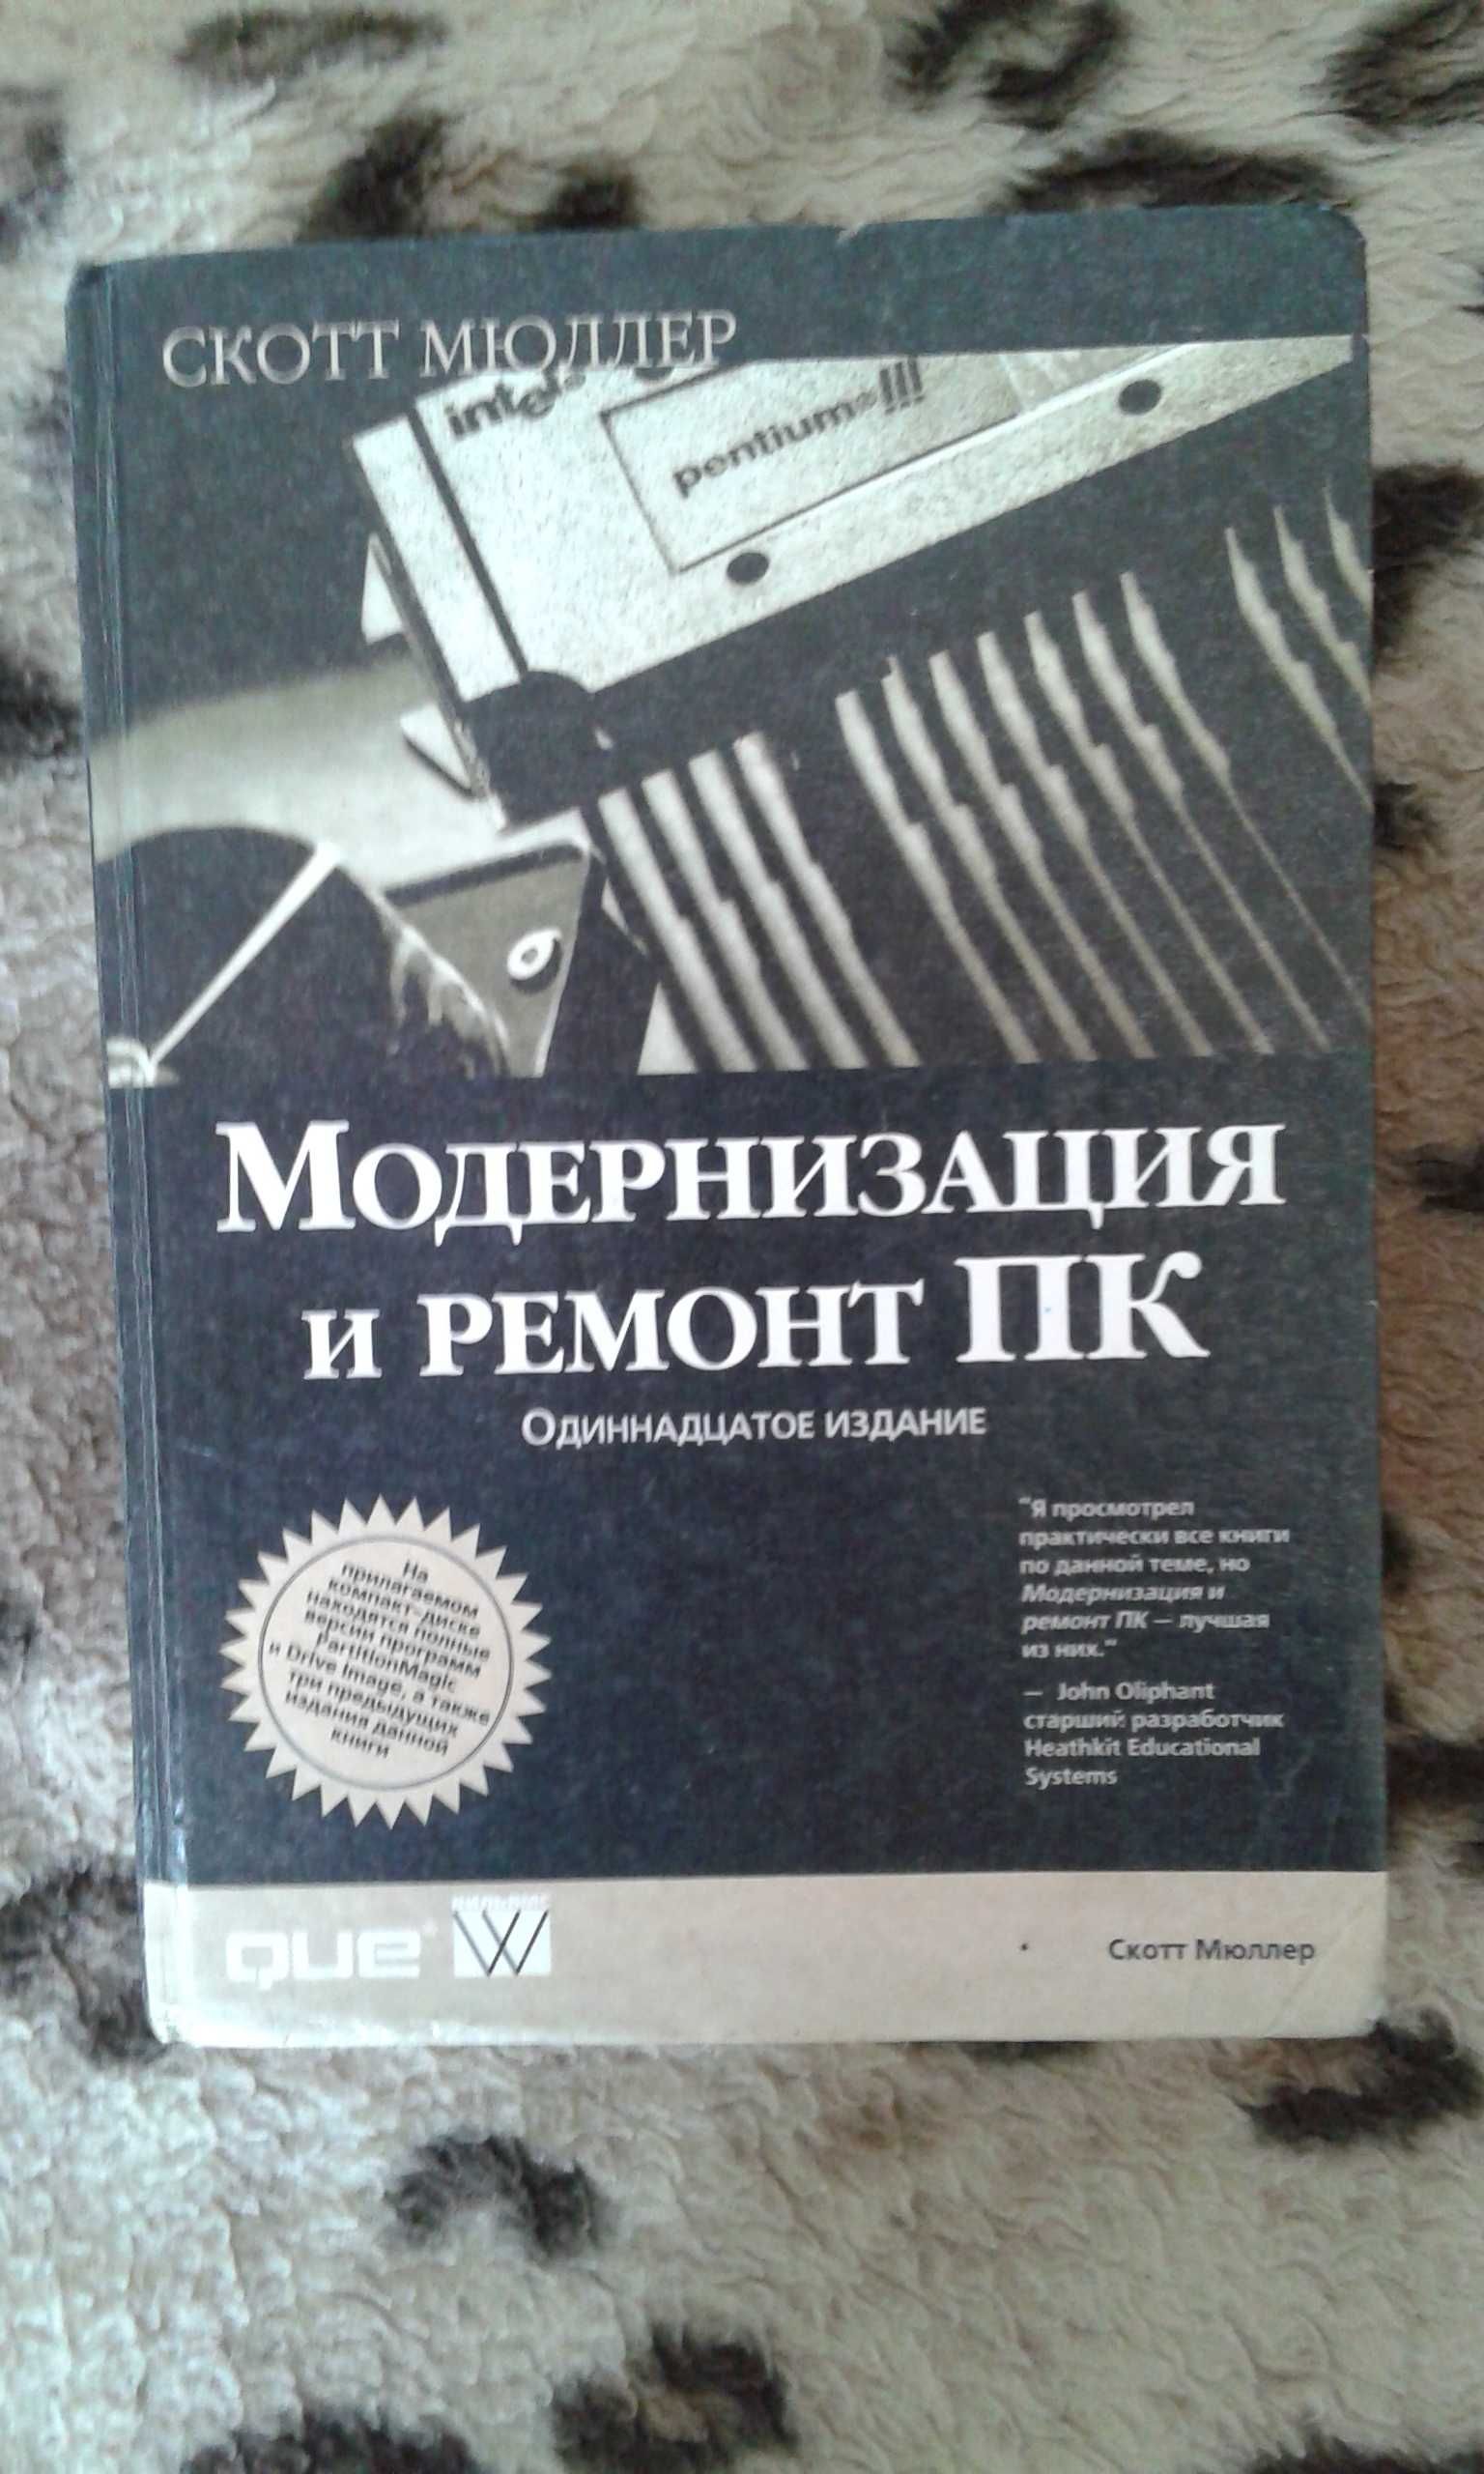 Книга Модернизация и Ремонт ПК СКОТТ МЮЛЛЕР